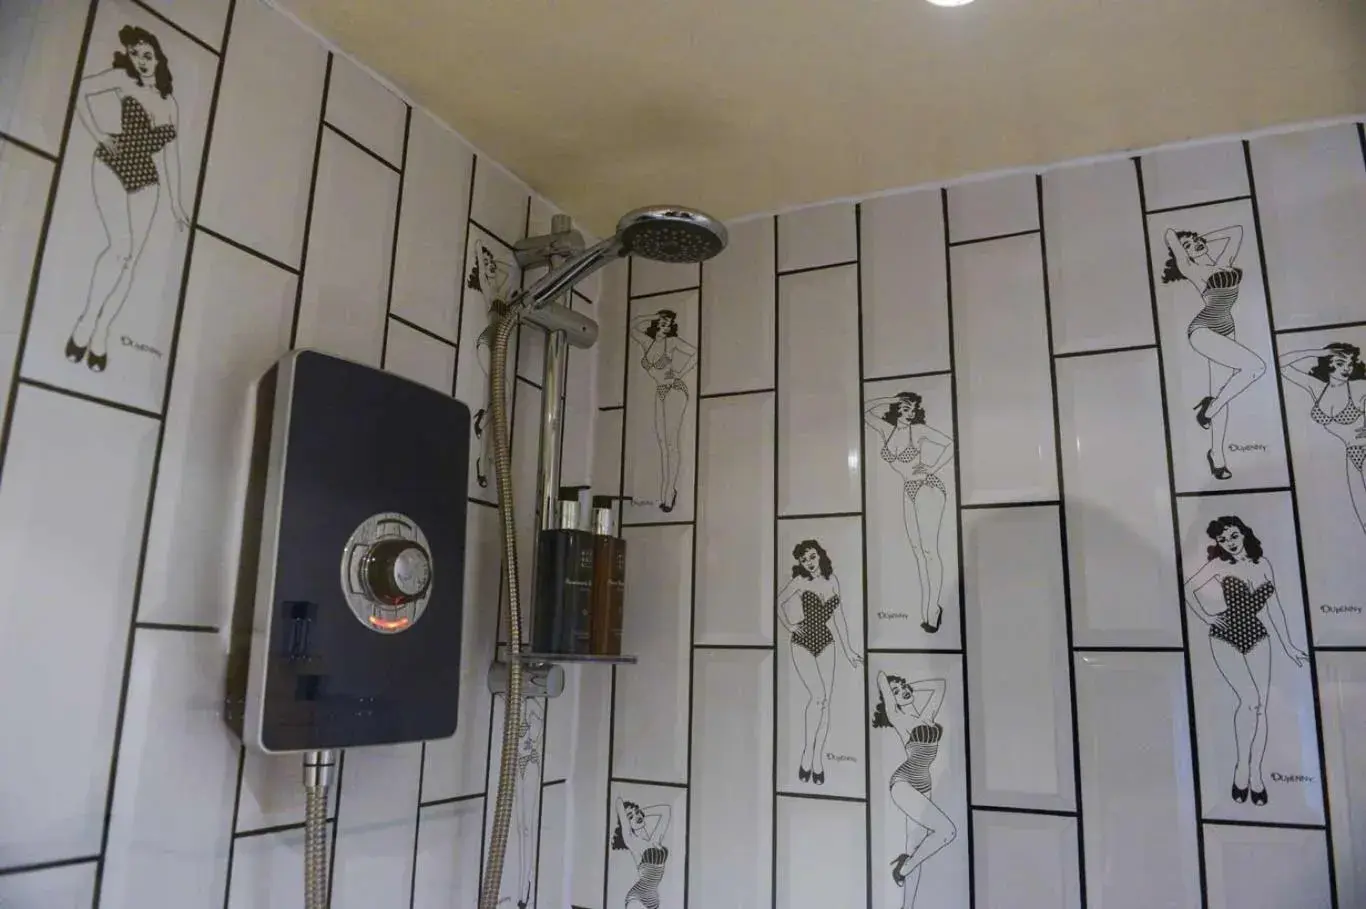 Bathroom in Hotel Pelirocco